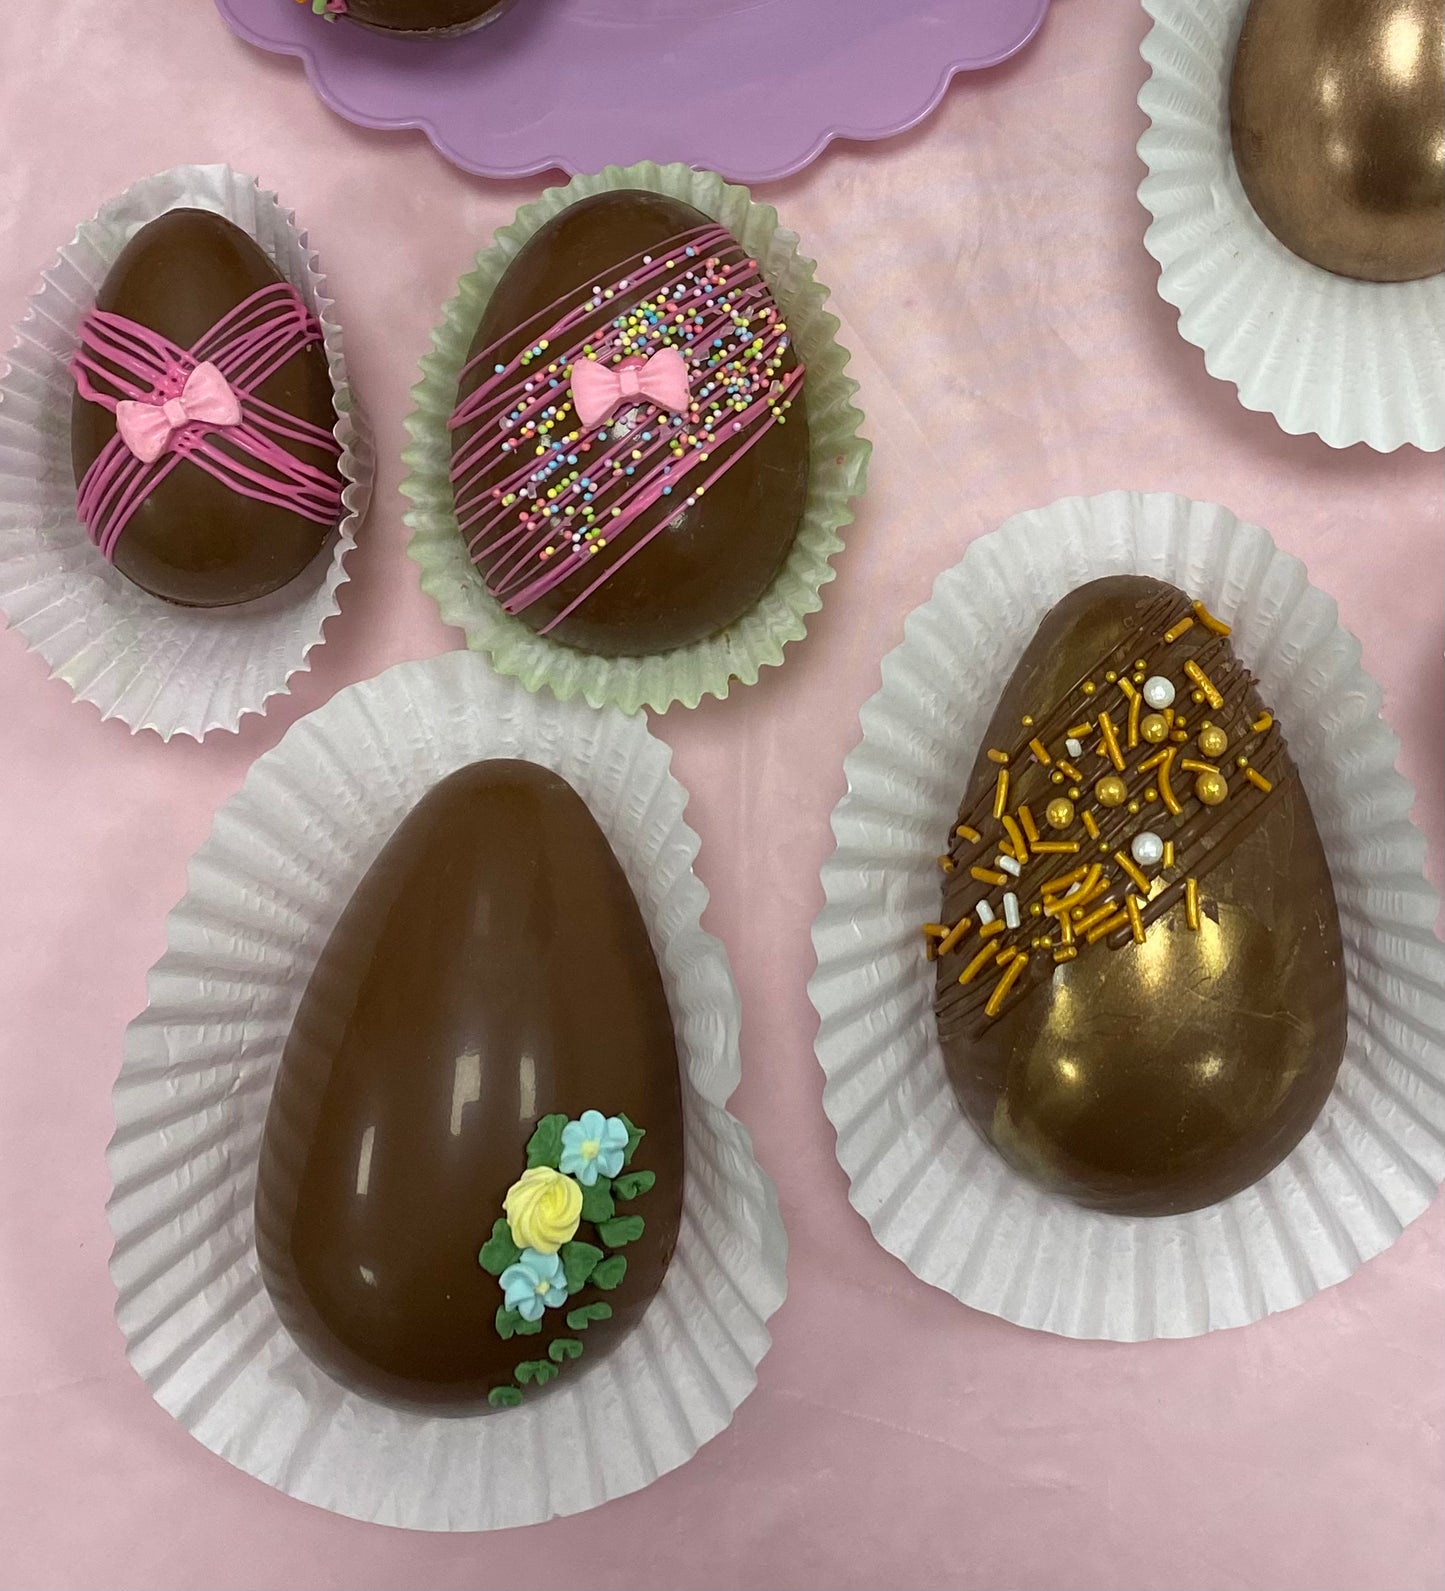 Chocolate Easter Egg Demo Class